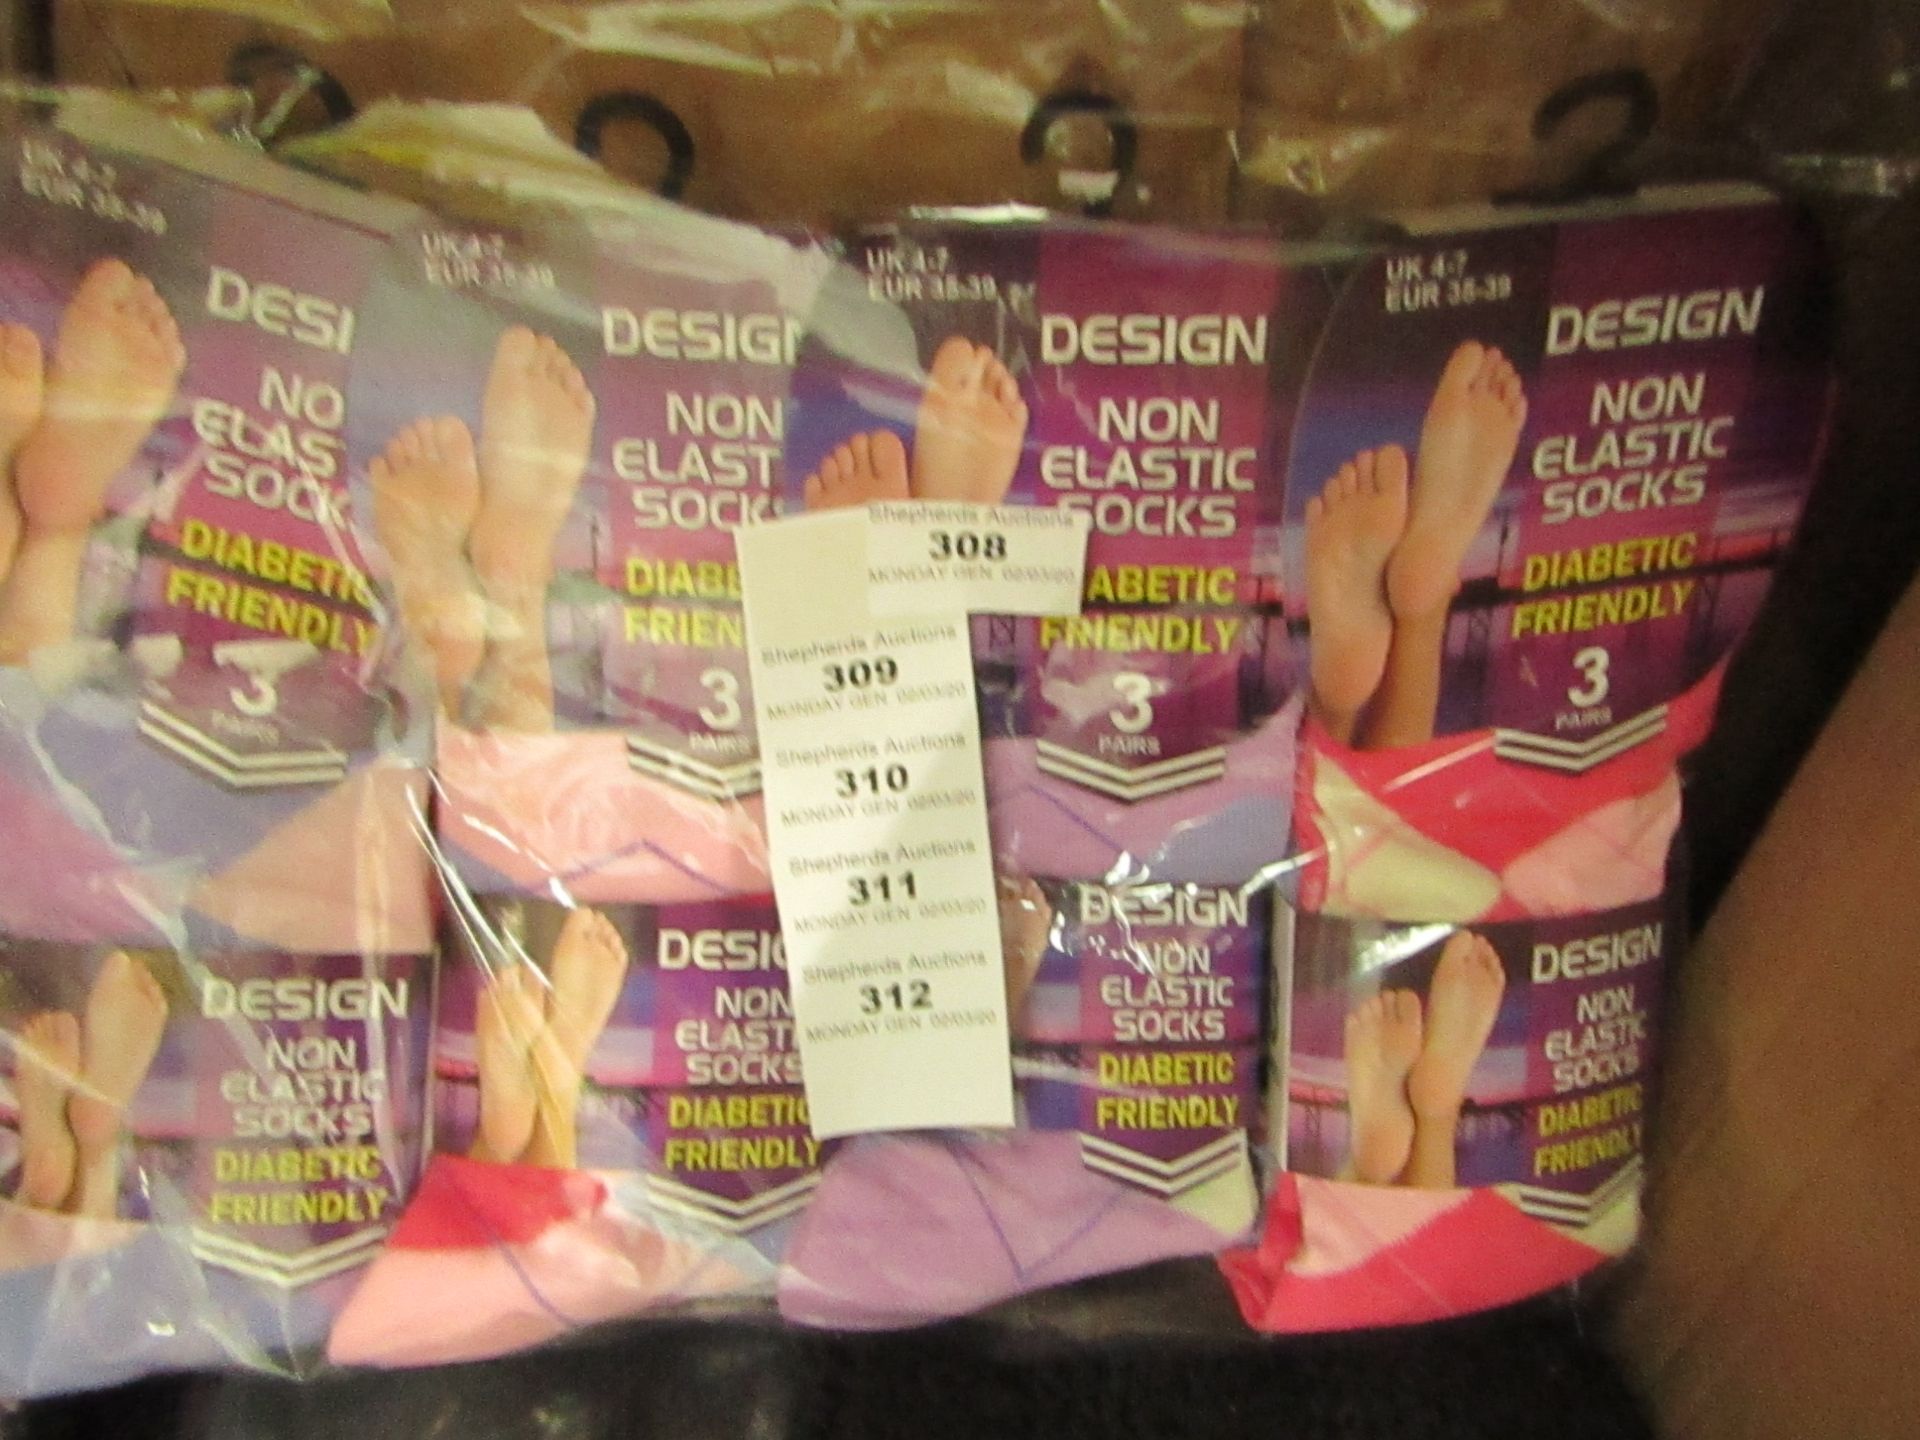 12 Pairs of Ladies Non Elastic Diabetic Friendly Socks.Size 4 - 7. New & packaged